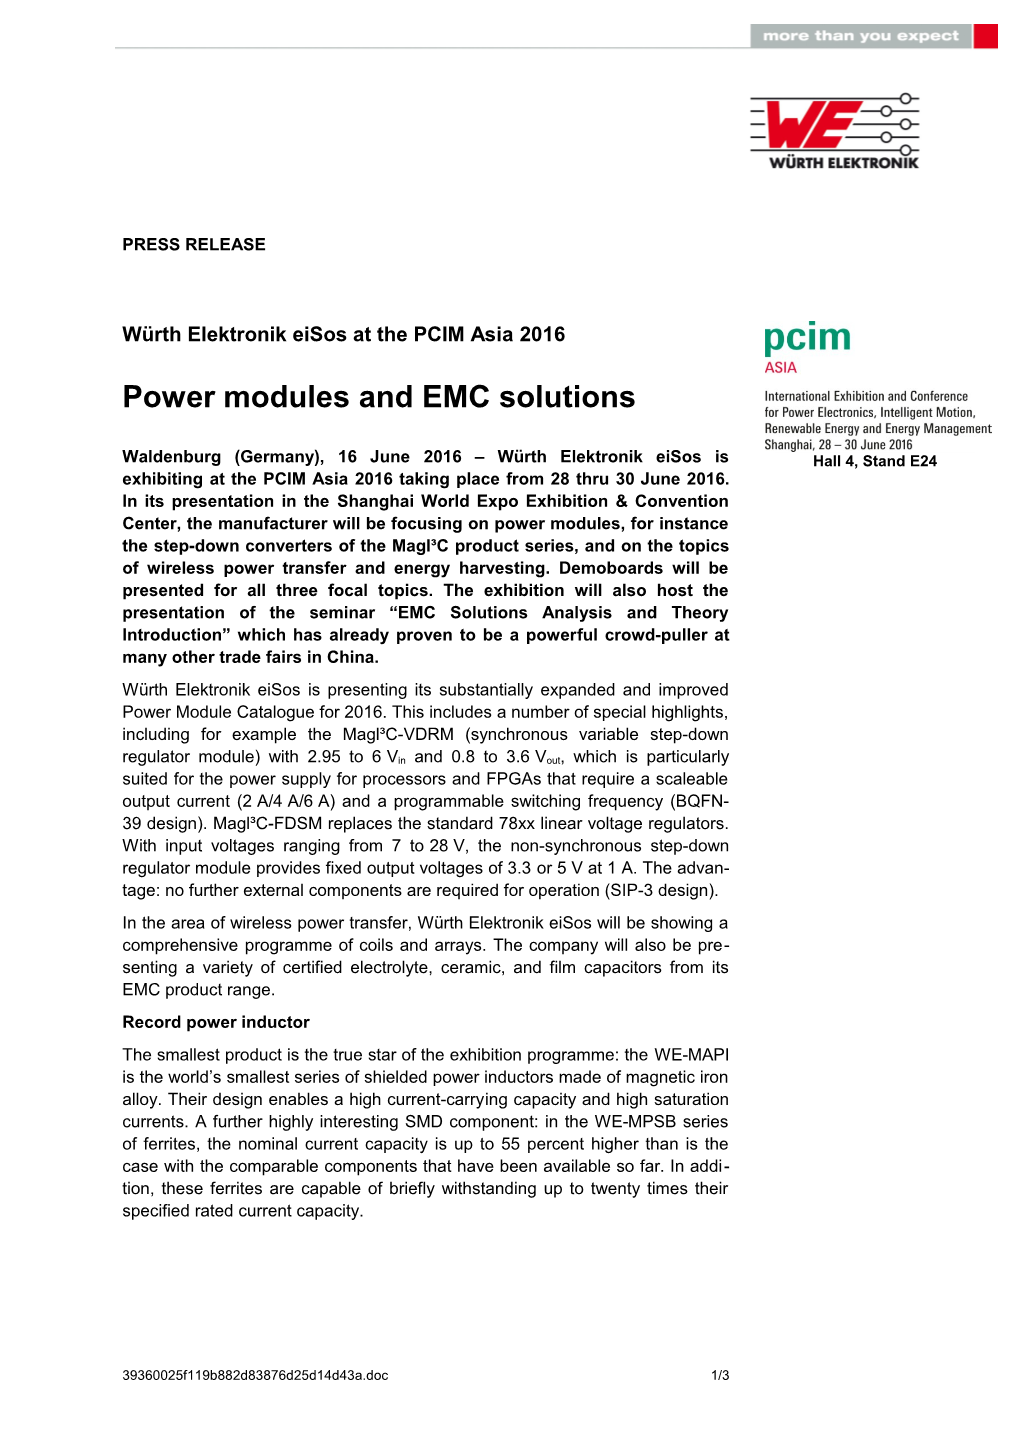 Power Modulesand EMC Solutions